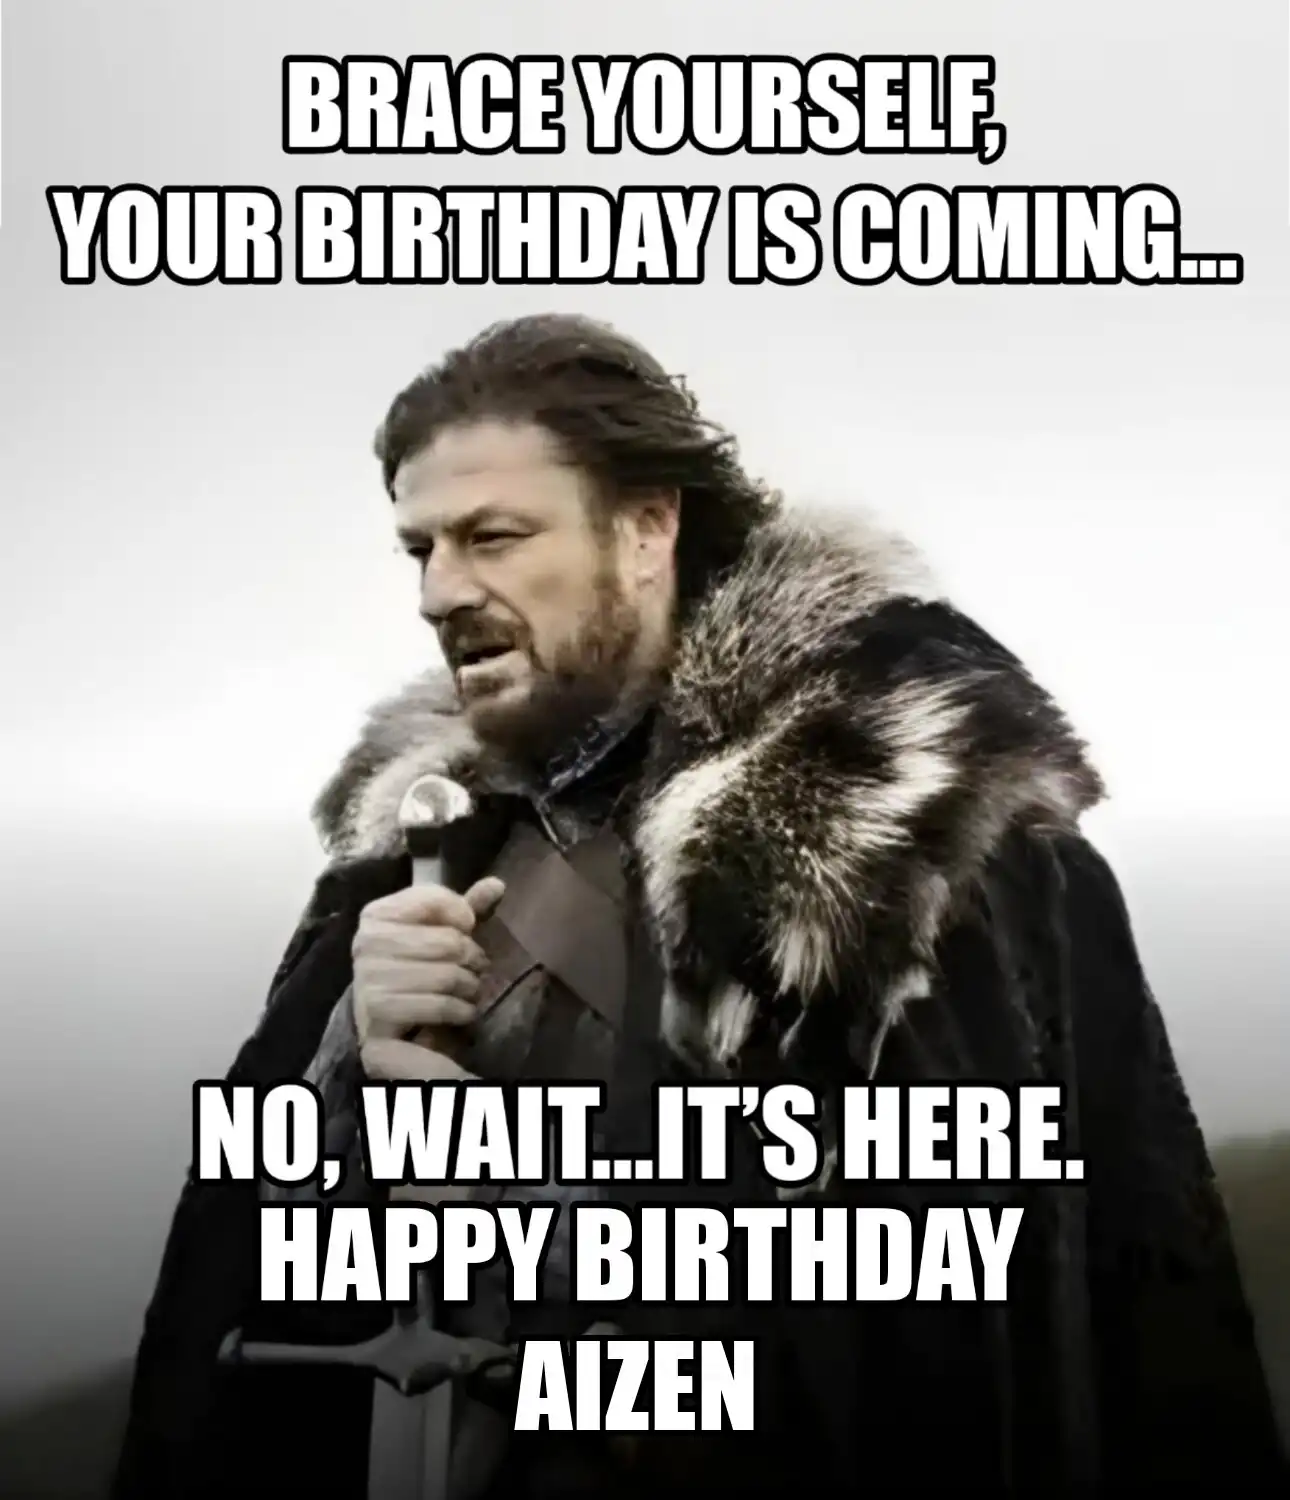 Happy Birthday Aizen Brace Yourself Your Birthday Is Coming Meme